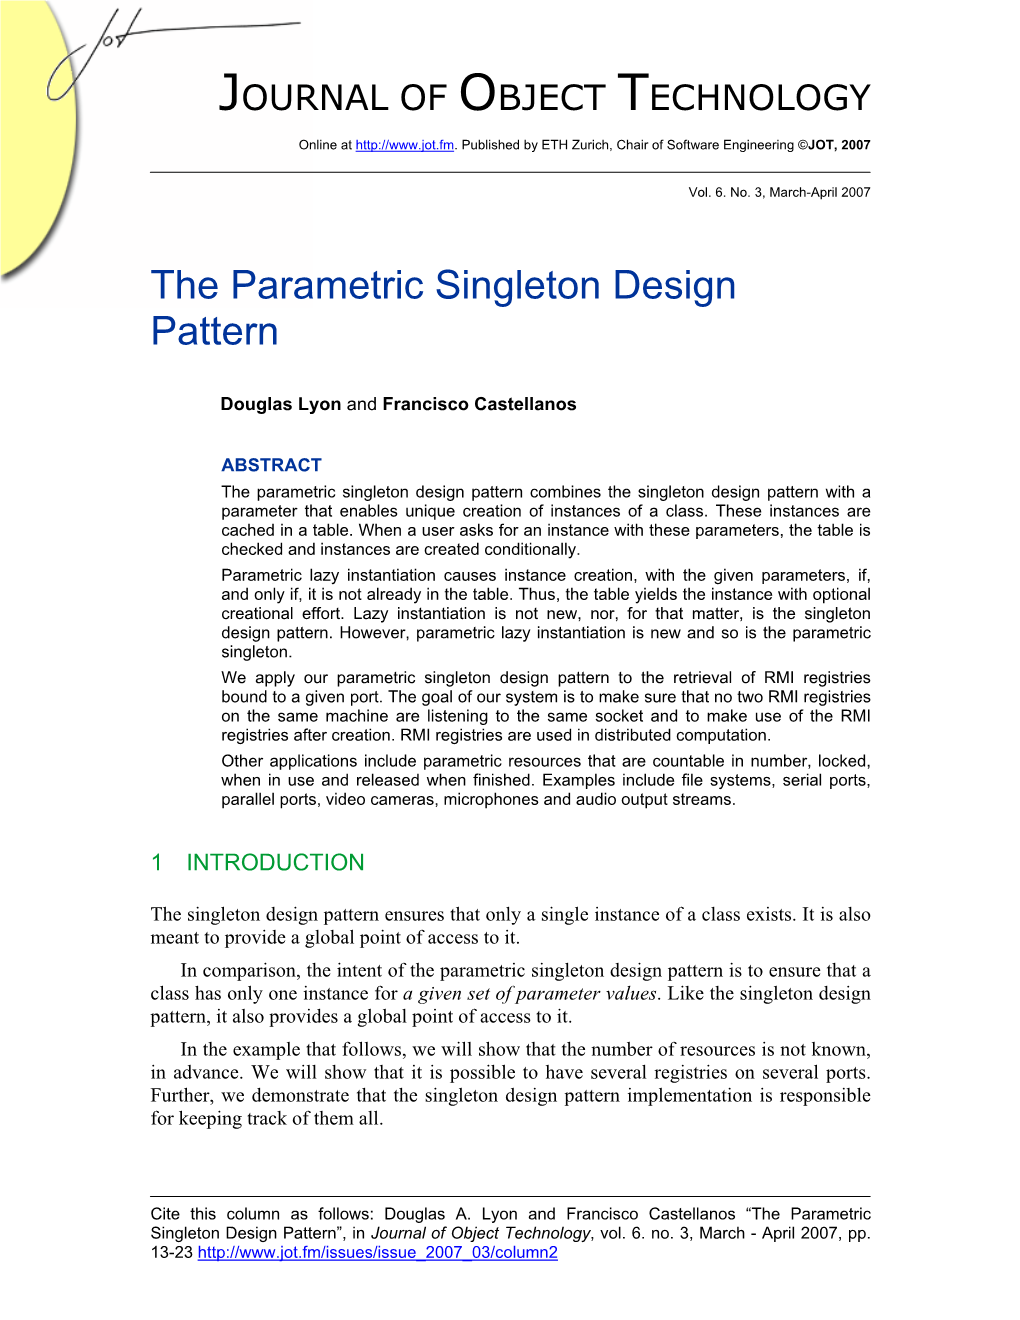 The Parametric Singleton Design Pattern